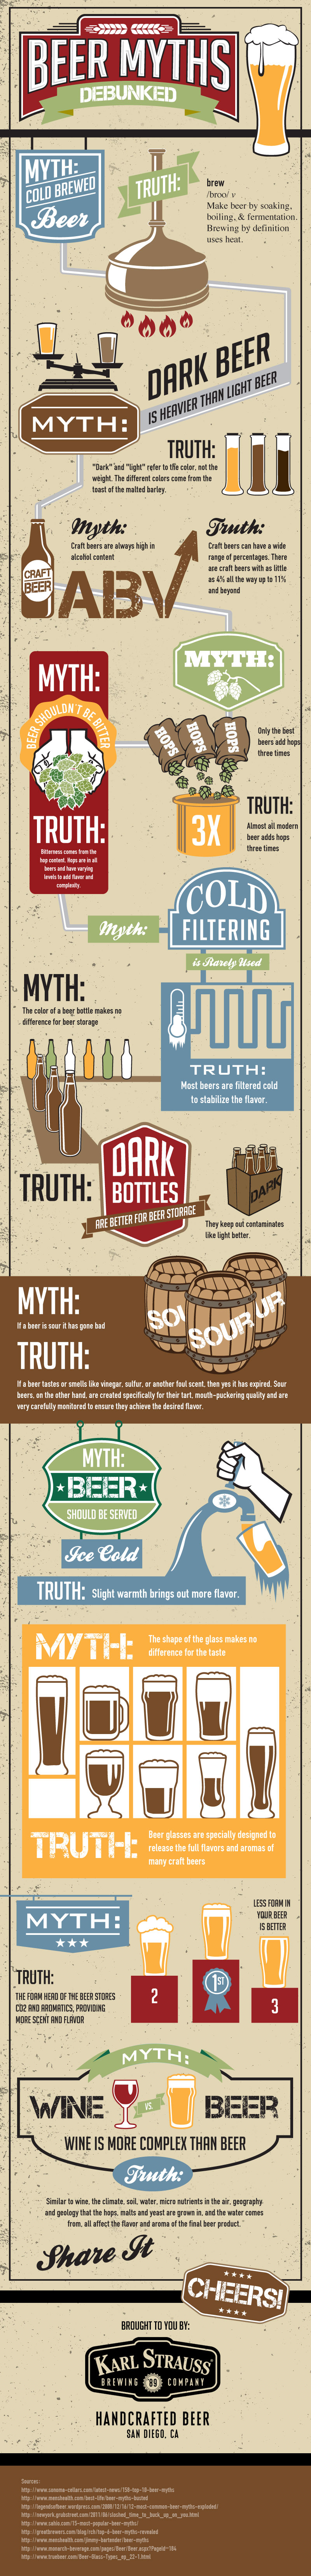 beer-myths-debunked_51a4f9a14e30a-1